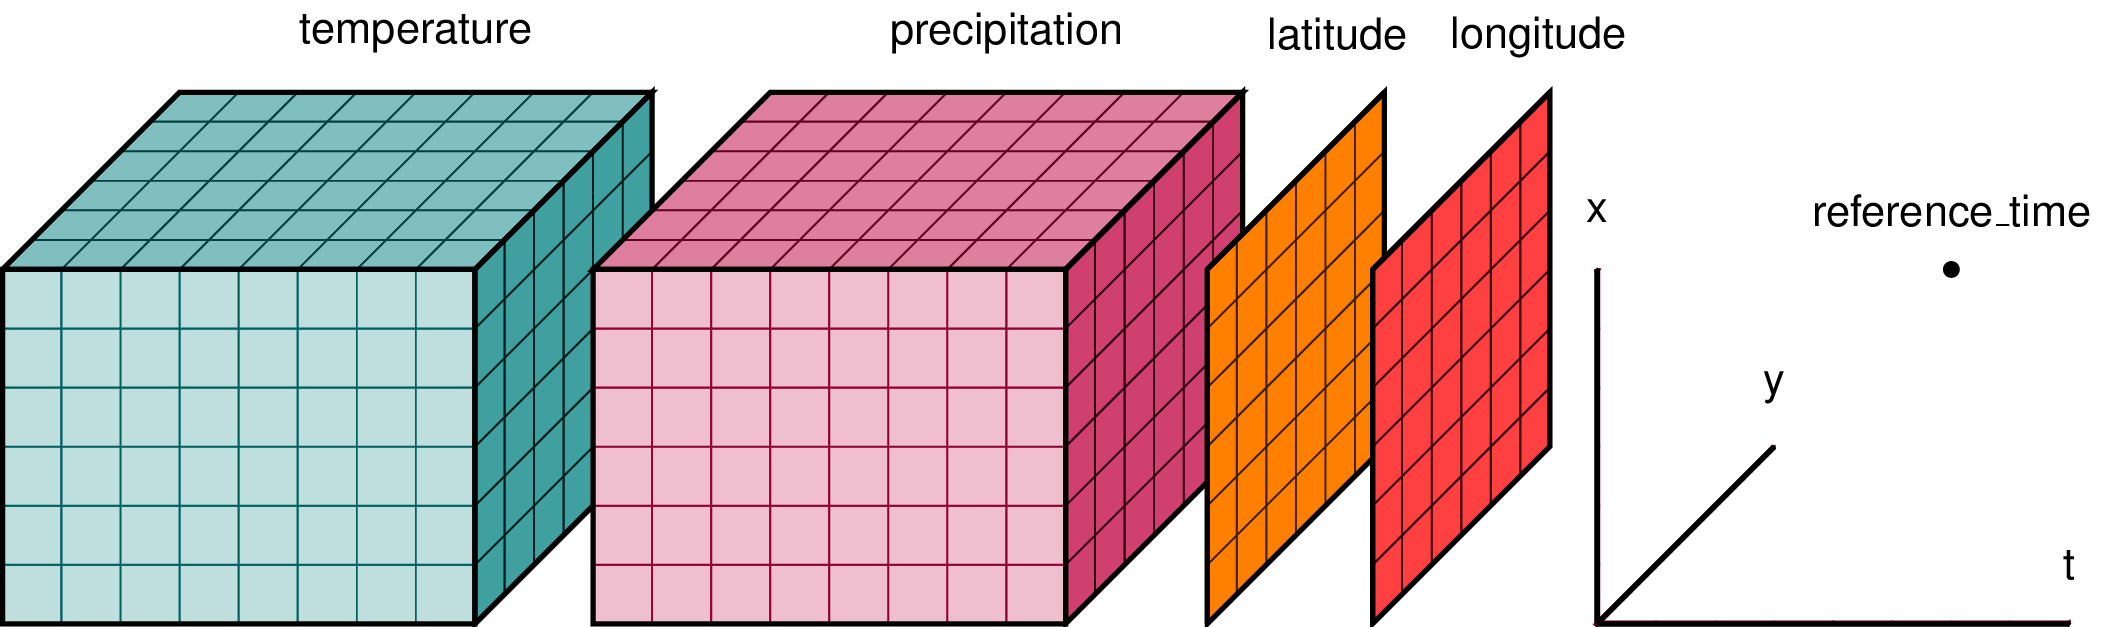 Xarray Data Model